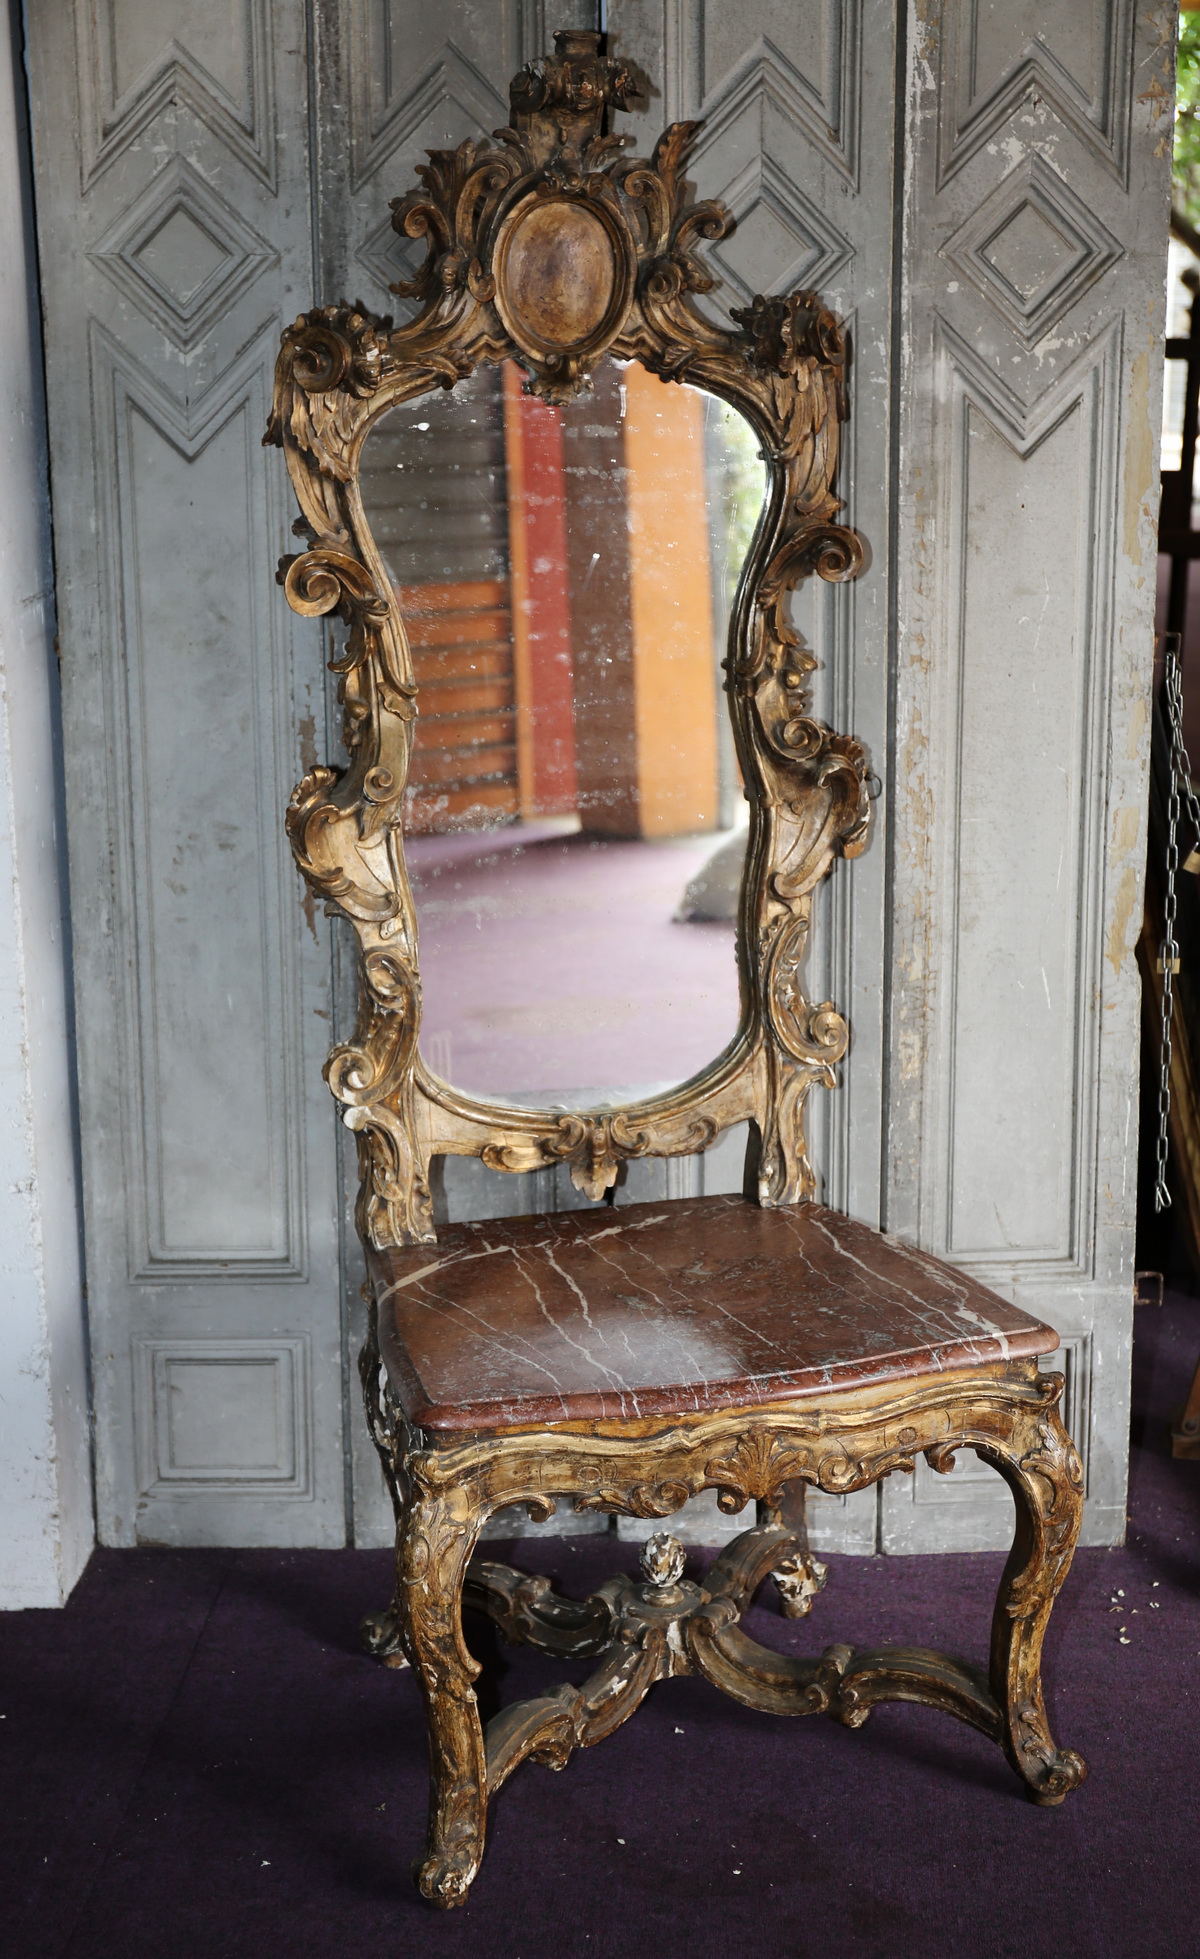 18th century transformed aparat chair